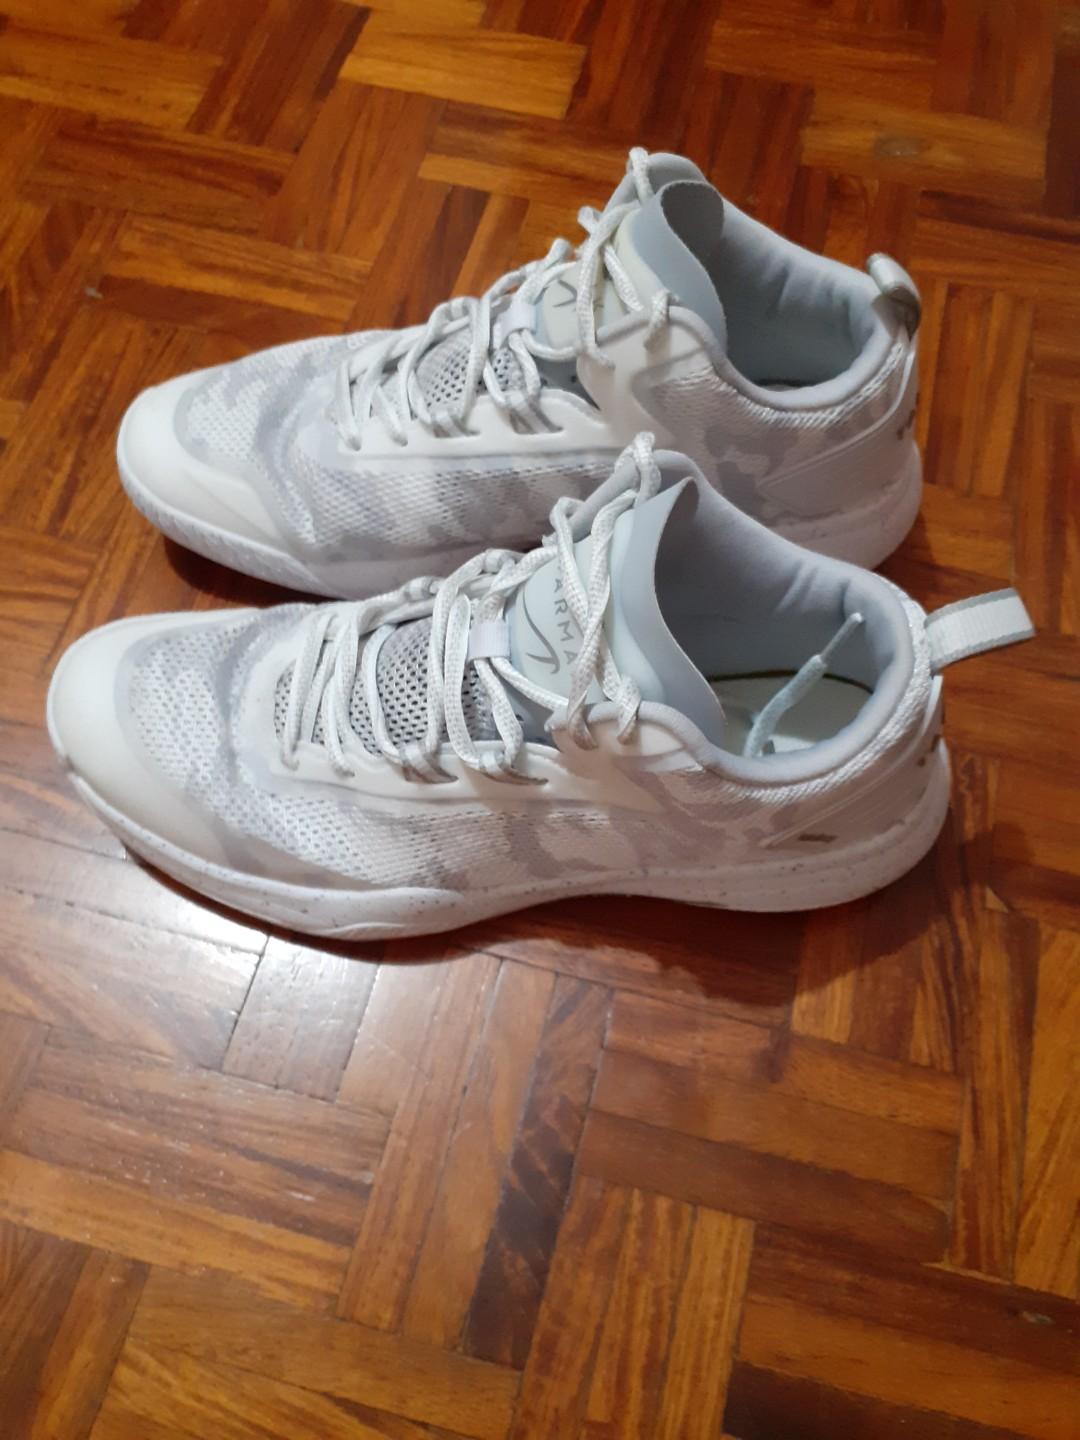 tarmak shoes basketball